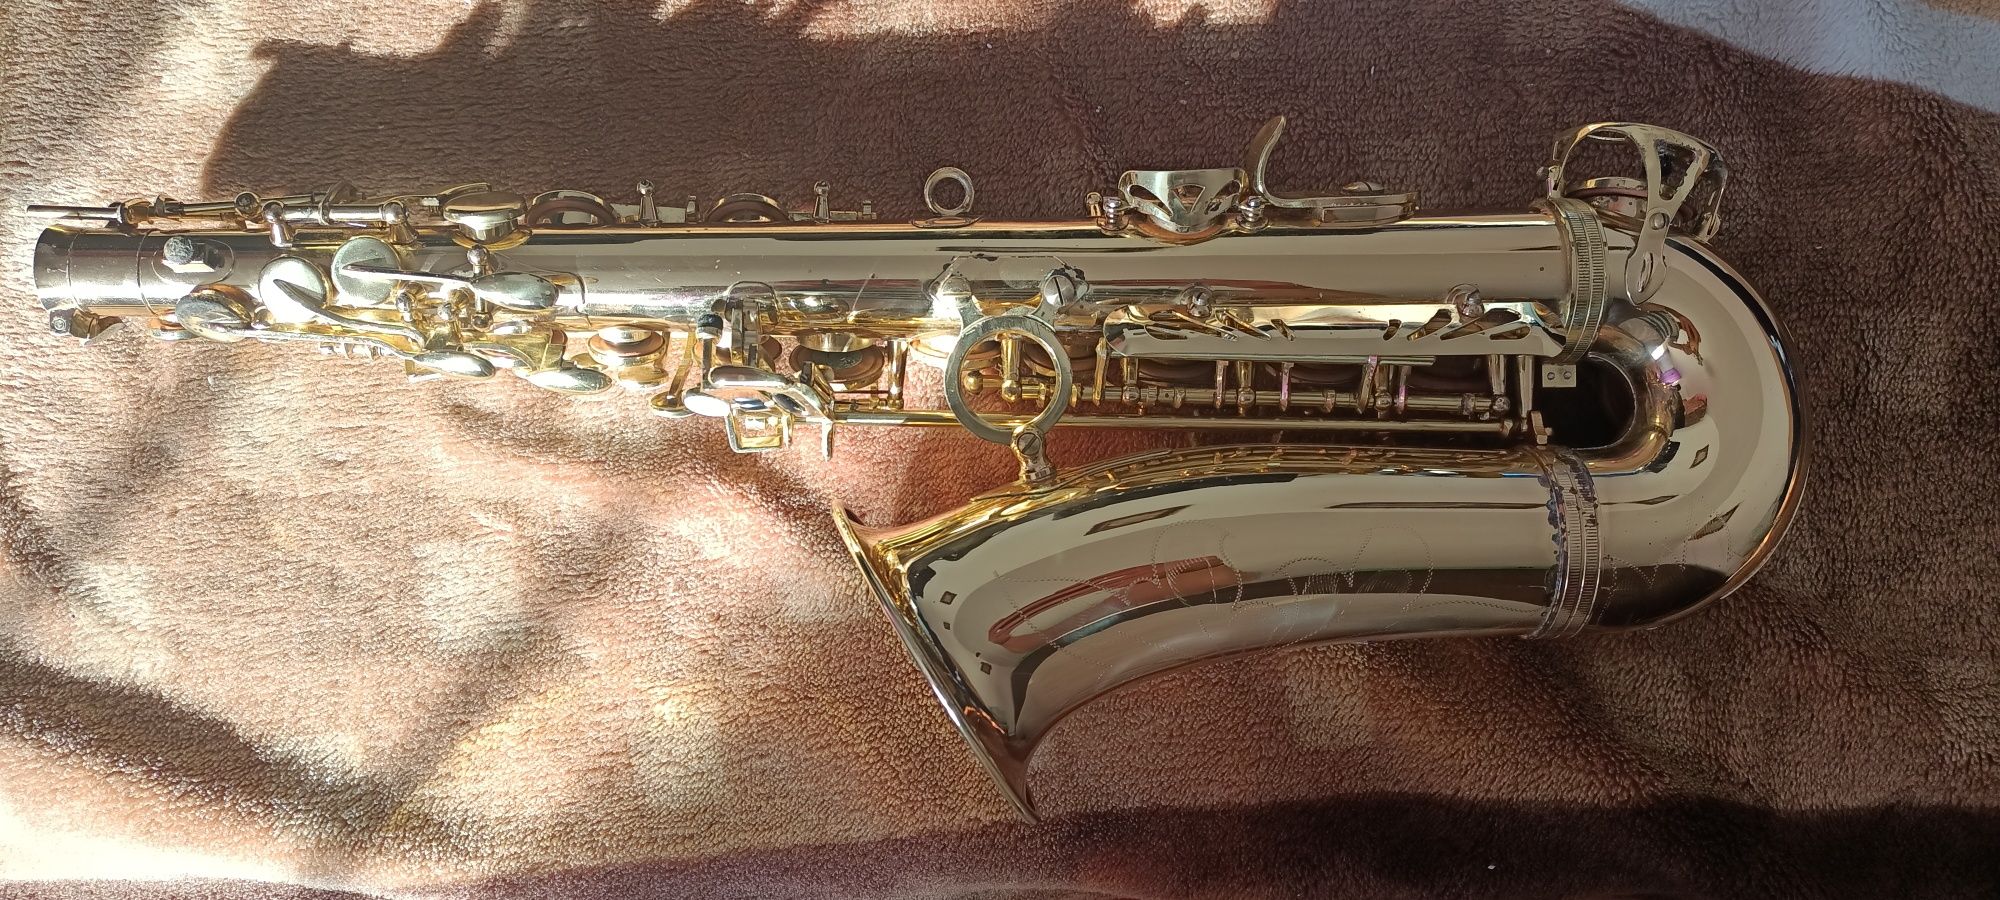 Saxofon alto Casima + muștiuc Yamaha C5